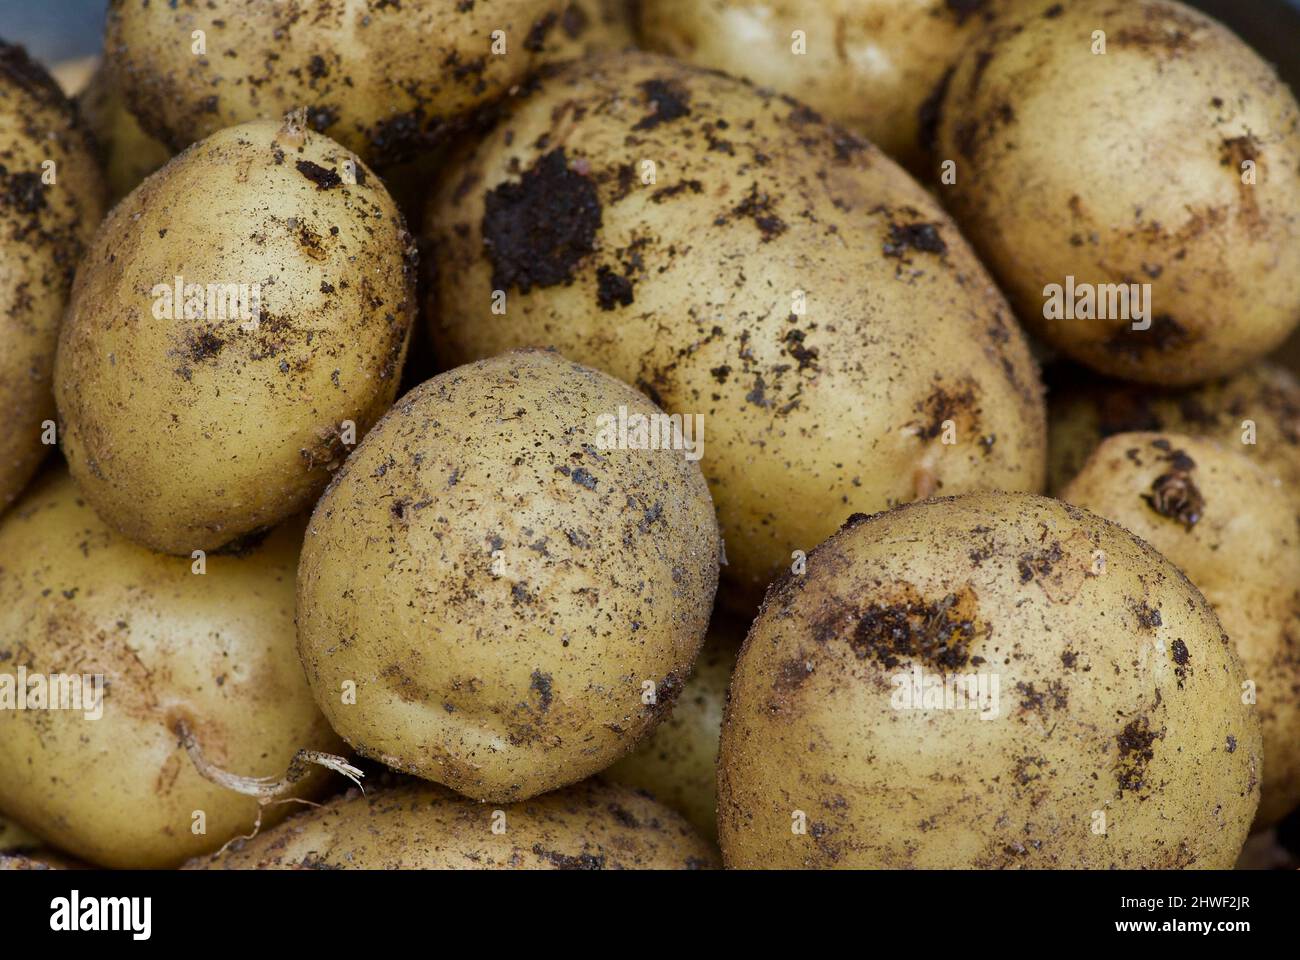 https://c8.alamy.com/comp/2HWF2JR/close-up-of-unwashed-new-potatoes-from-vegetable-garden-2HWF2JR.jpg